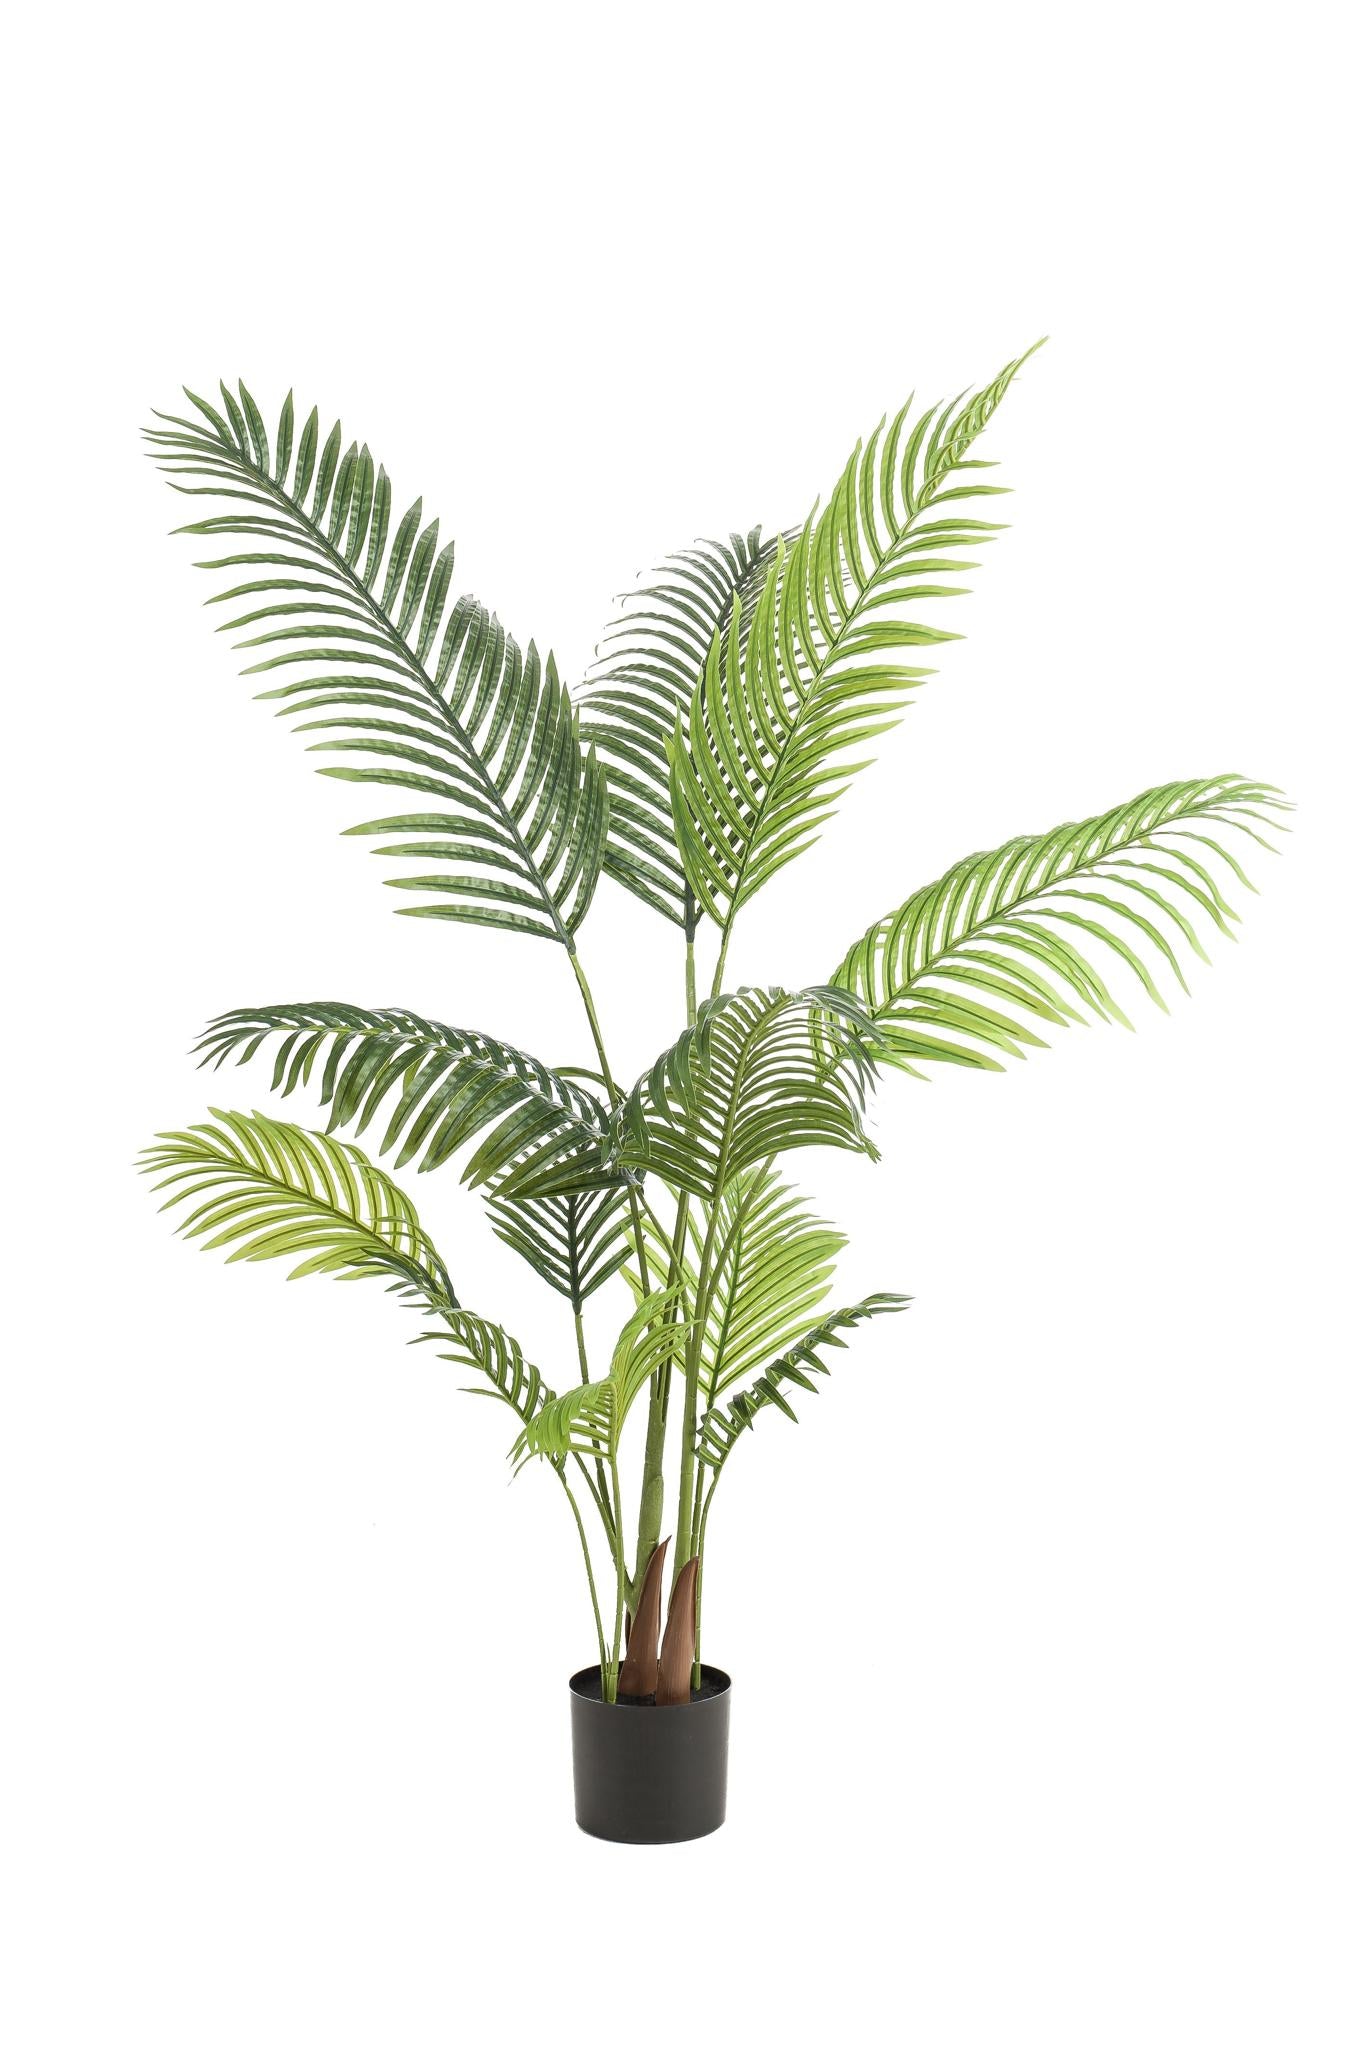 Kunstplant - Howea Forsteriana - Paradijspalm - 140 cm